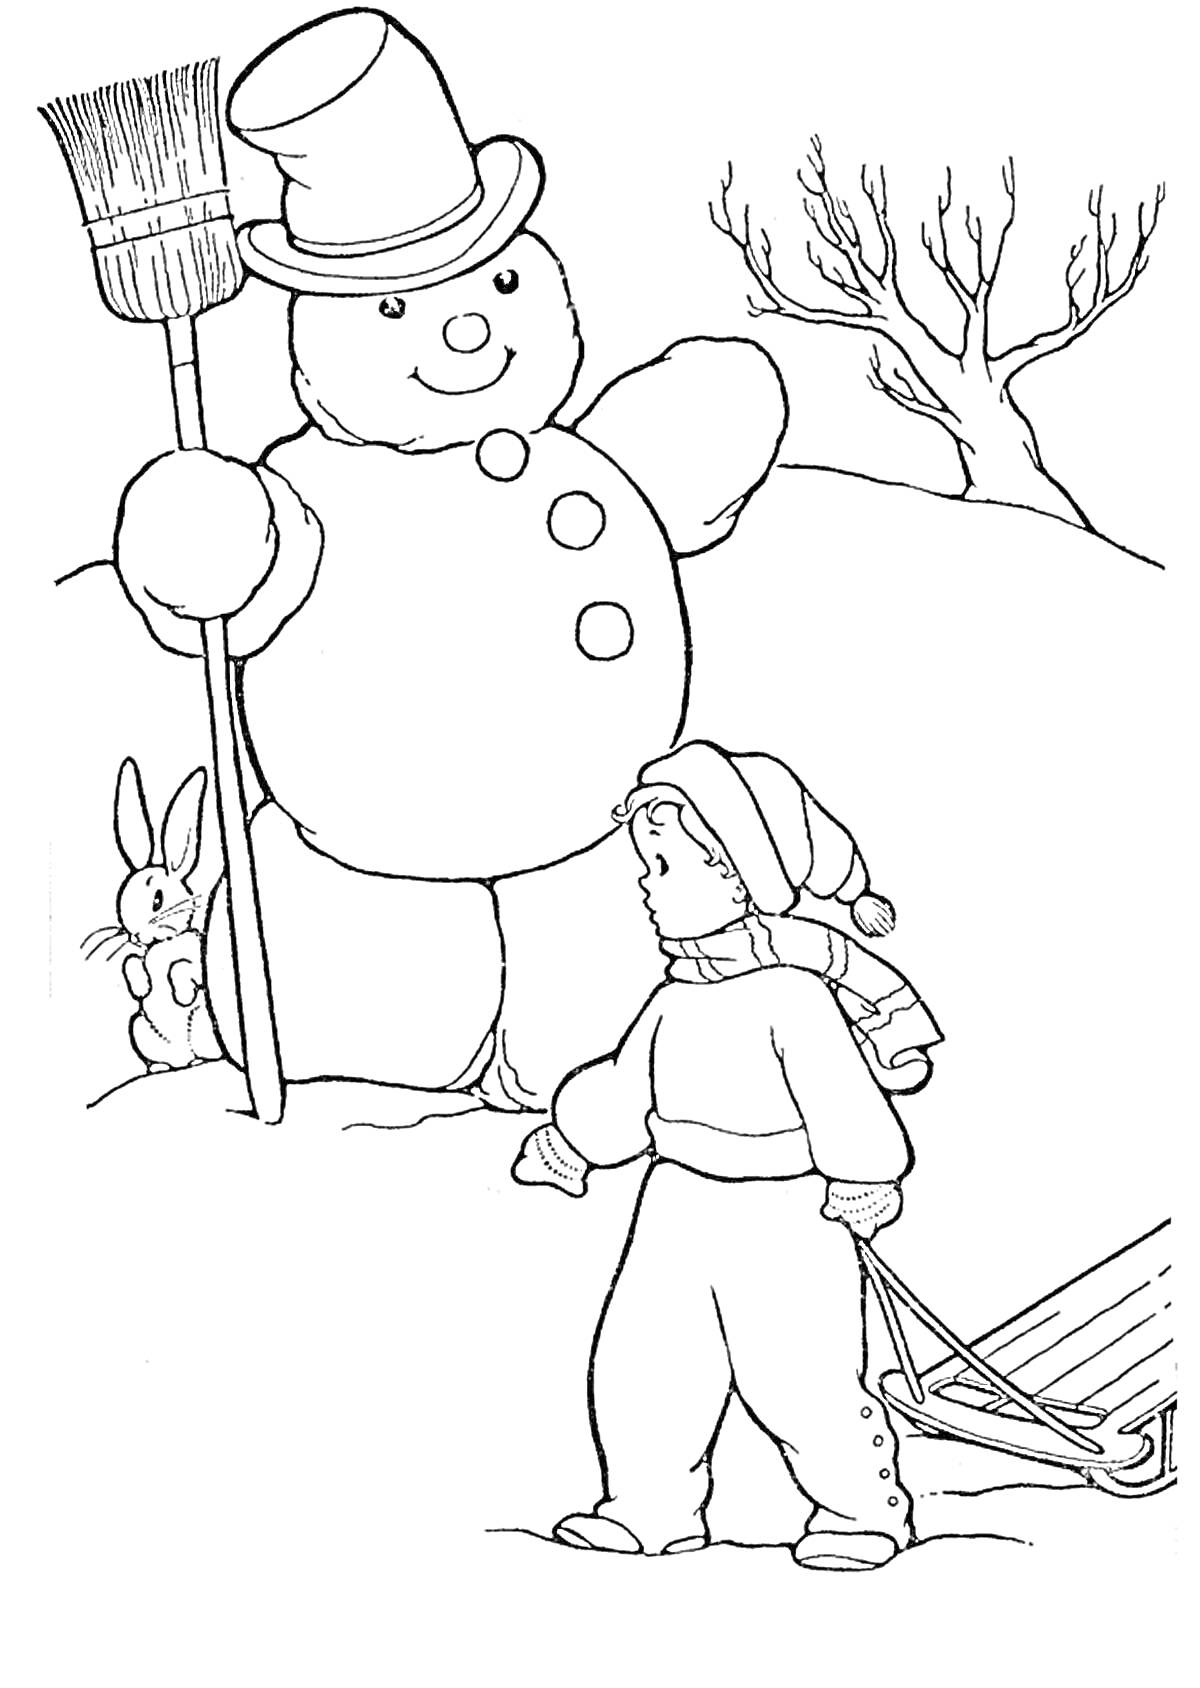 Раскраска Снеговик с метлой, ребенок с санками, дерево и заяц